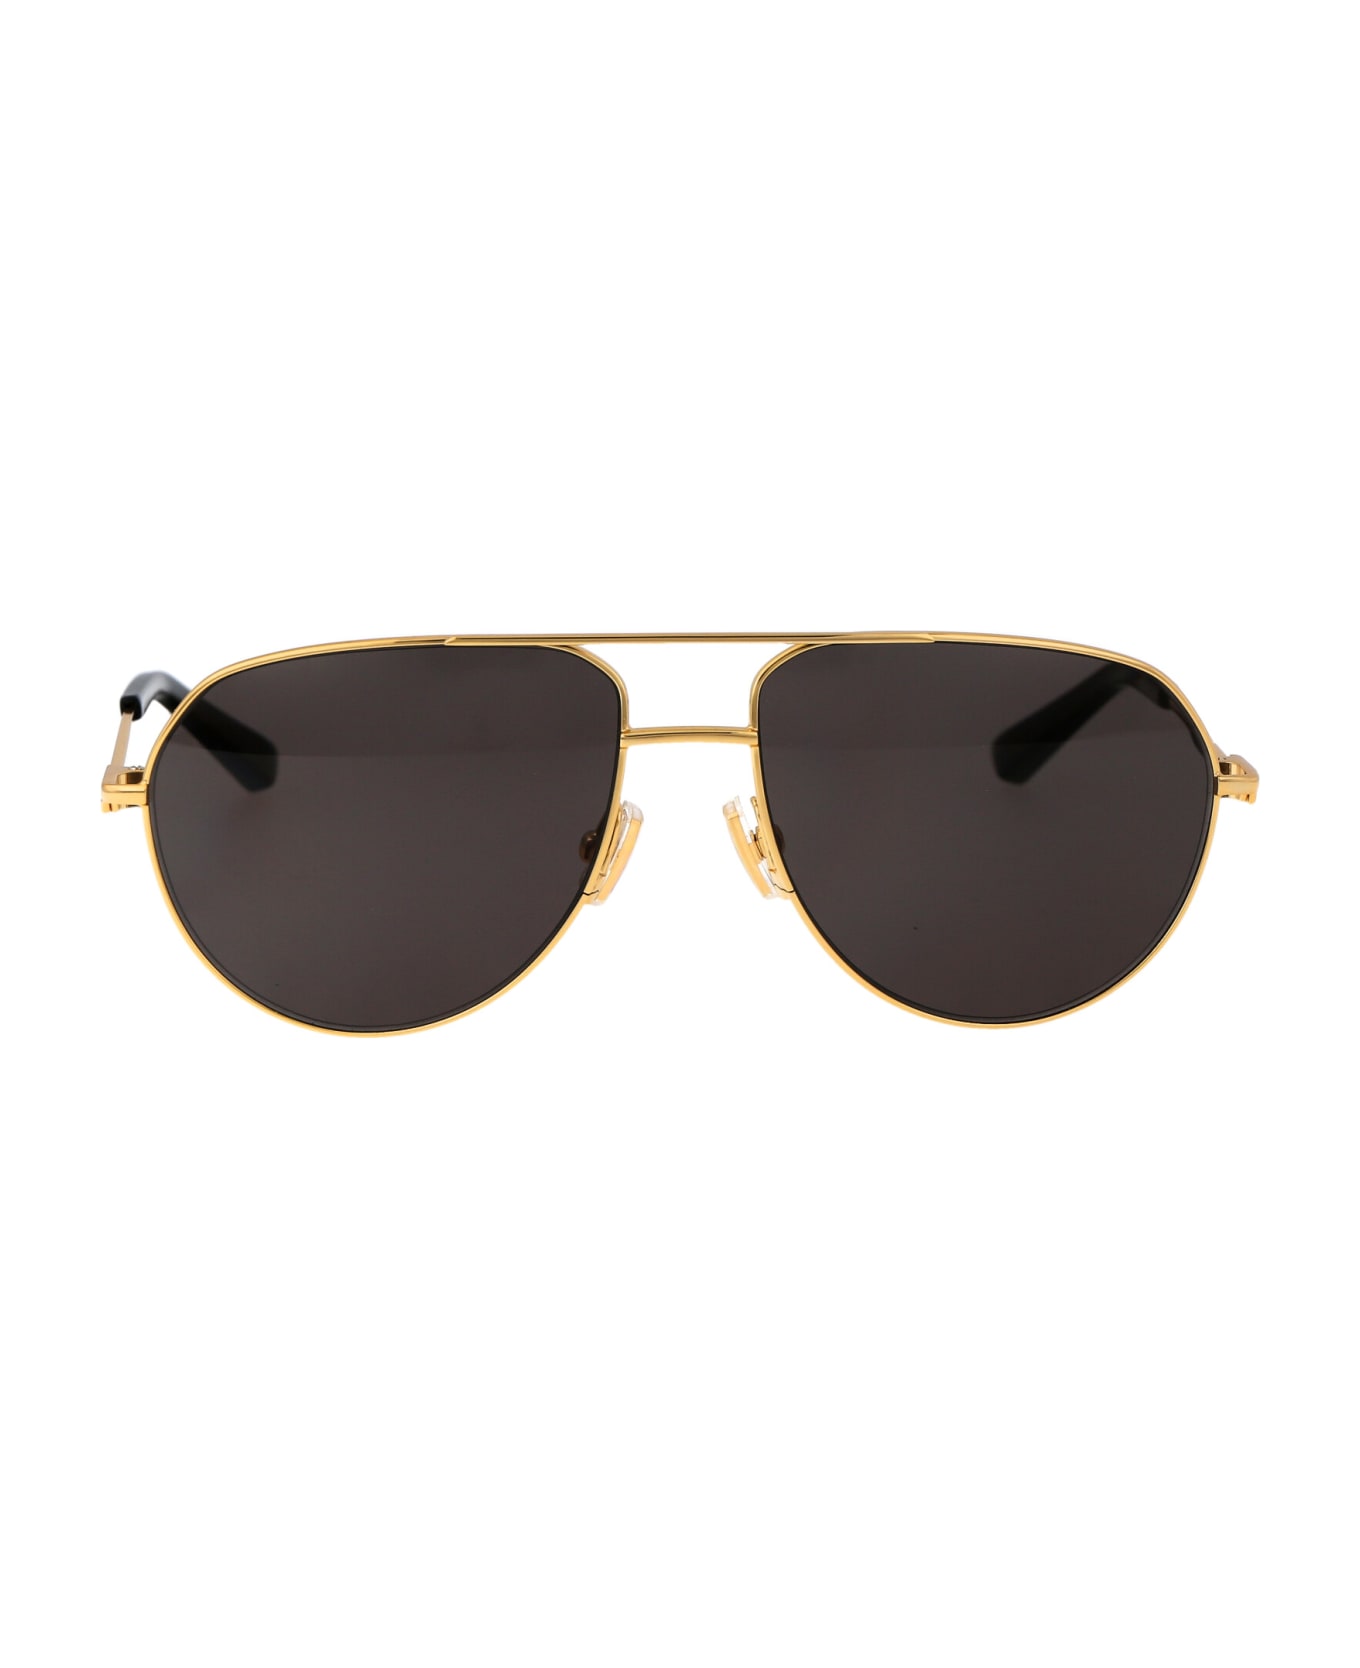 Bottega Veneta Eyewear Bv1302s Sunglasses - 001 GOLD GOLD GREY サングラス